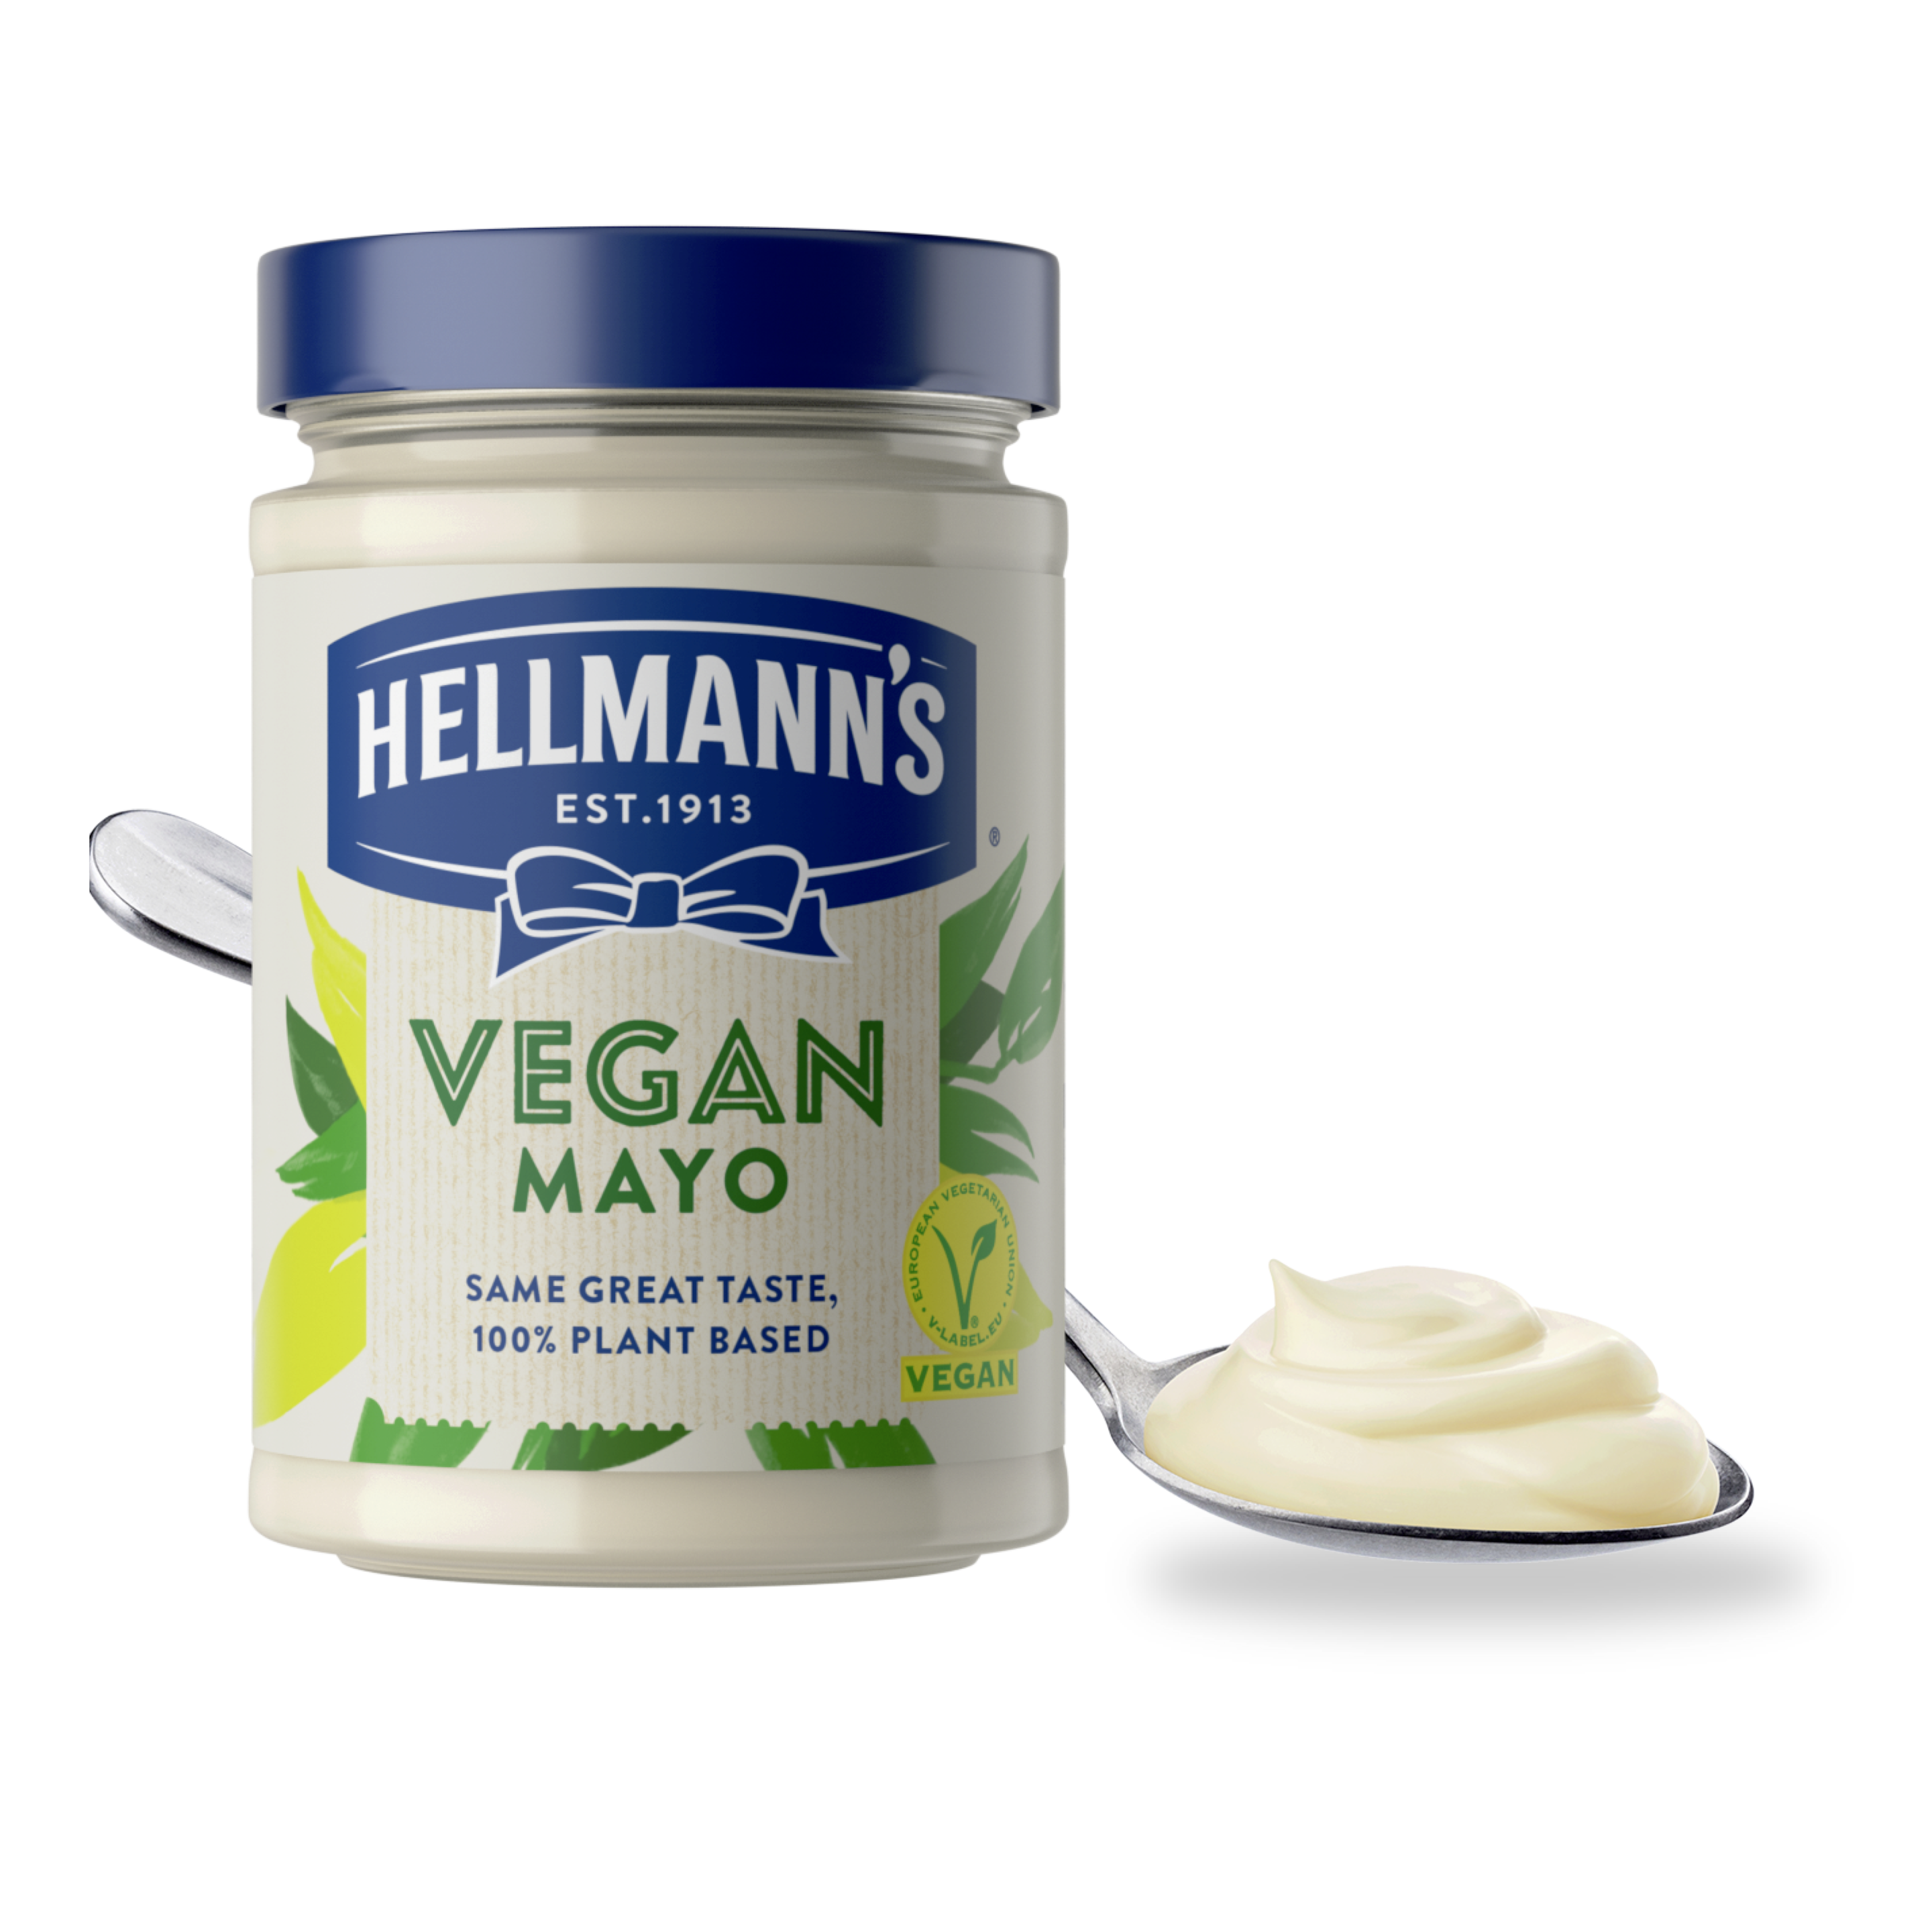 Hellmann's Vegan Mayo Pack Shot